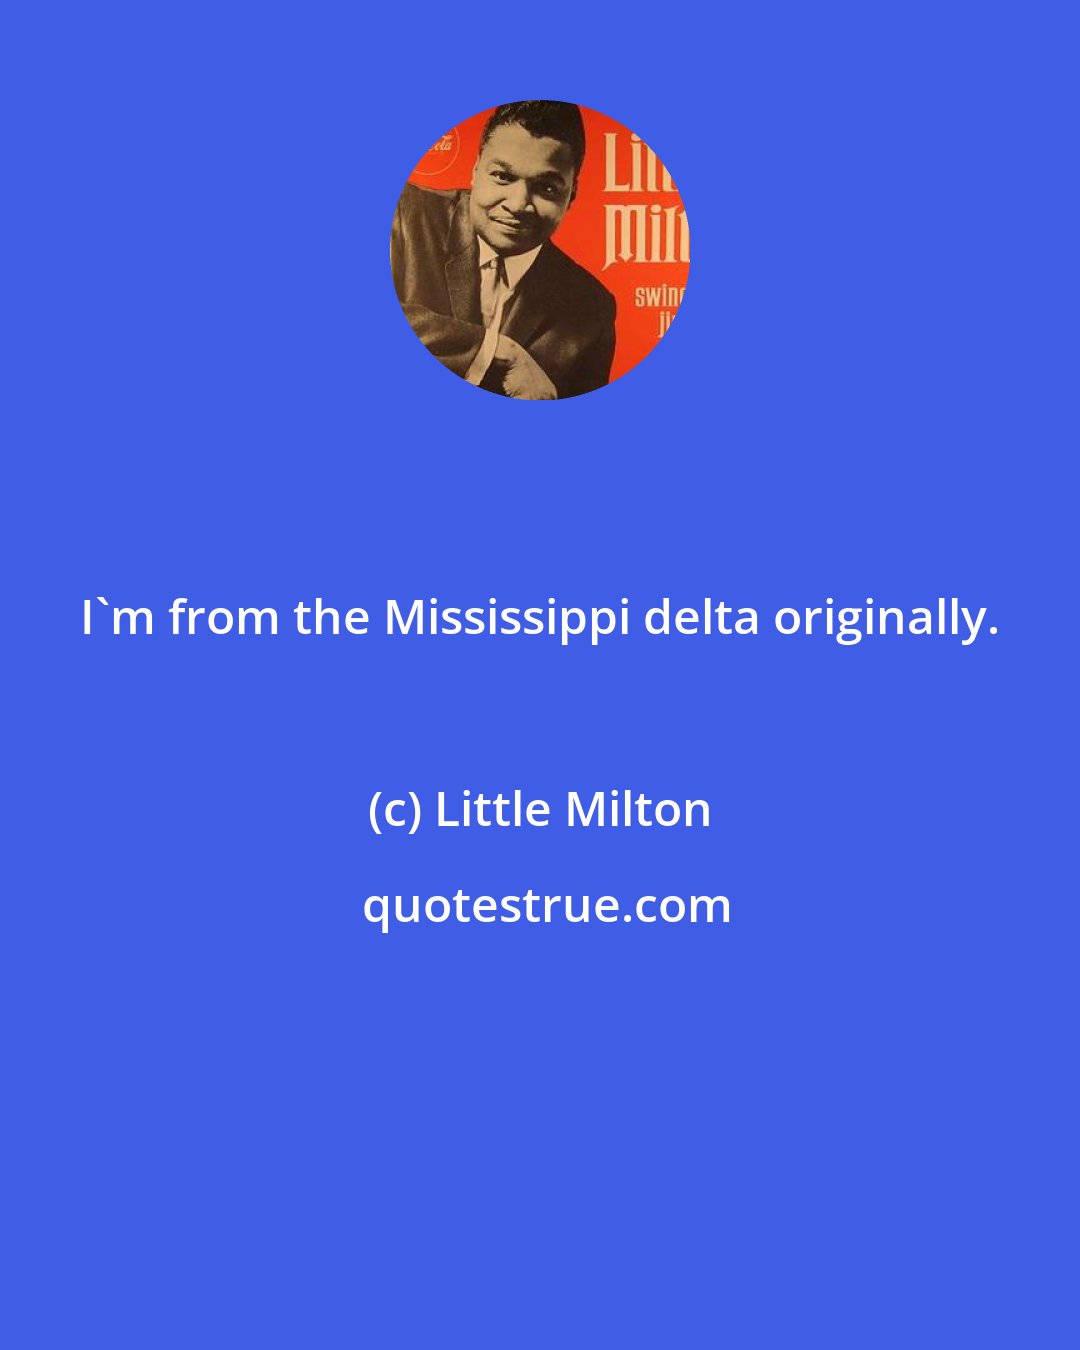 Little Milton: I'm from the Mississippi delta originally.